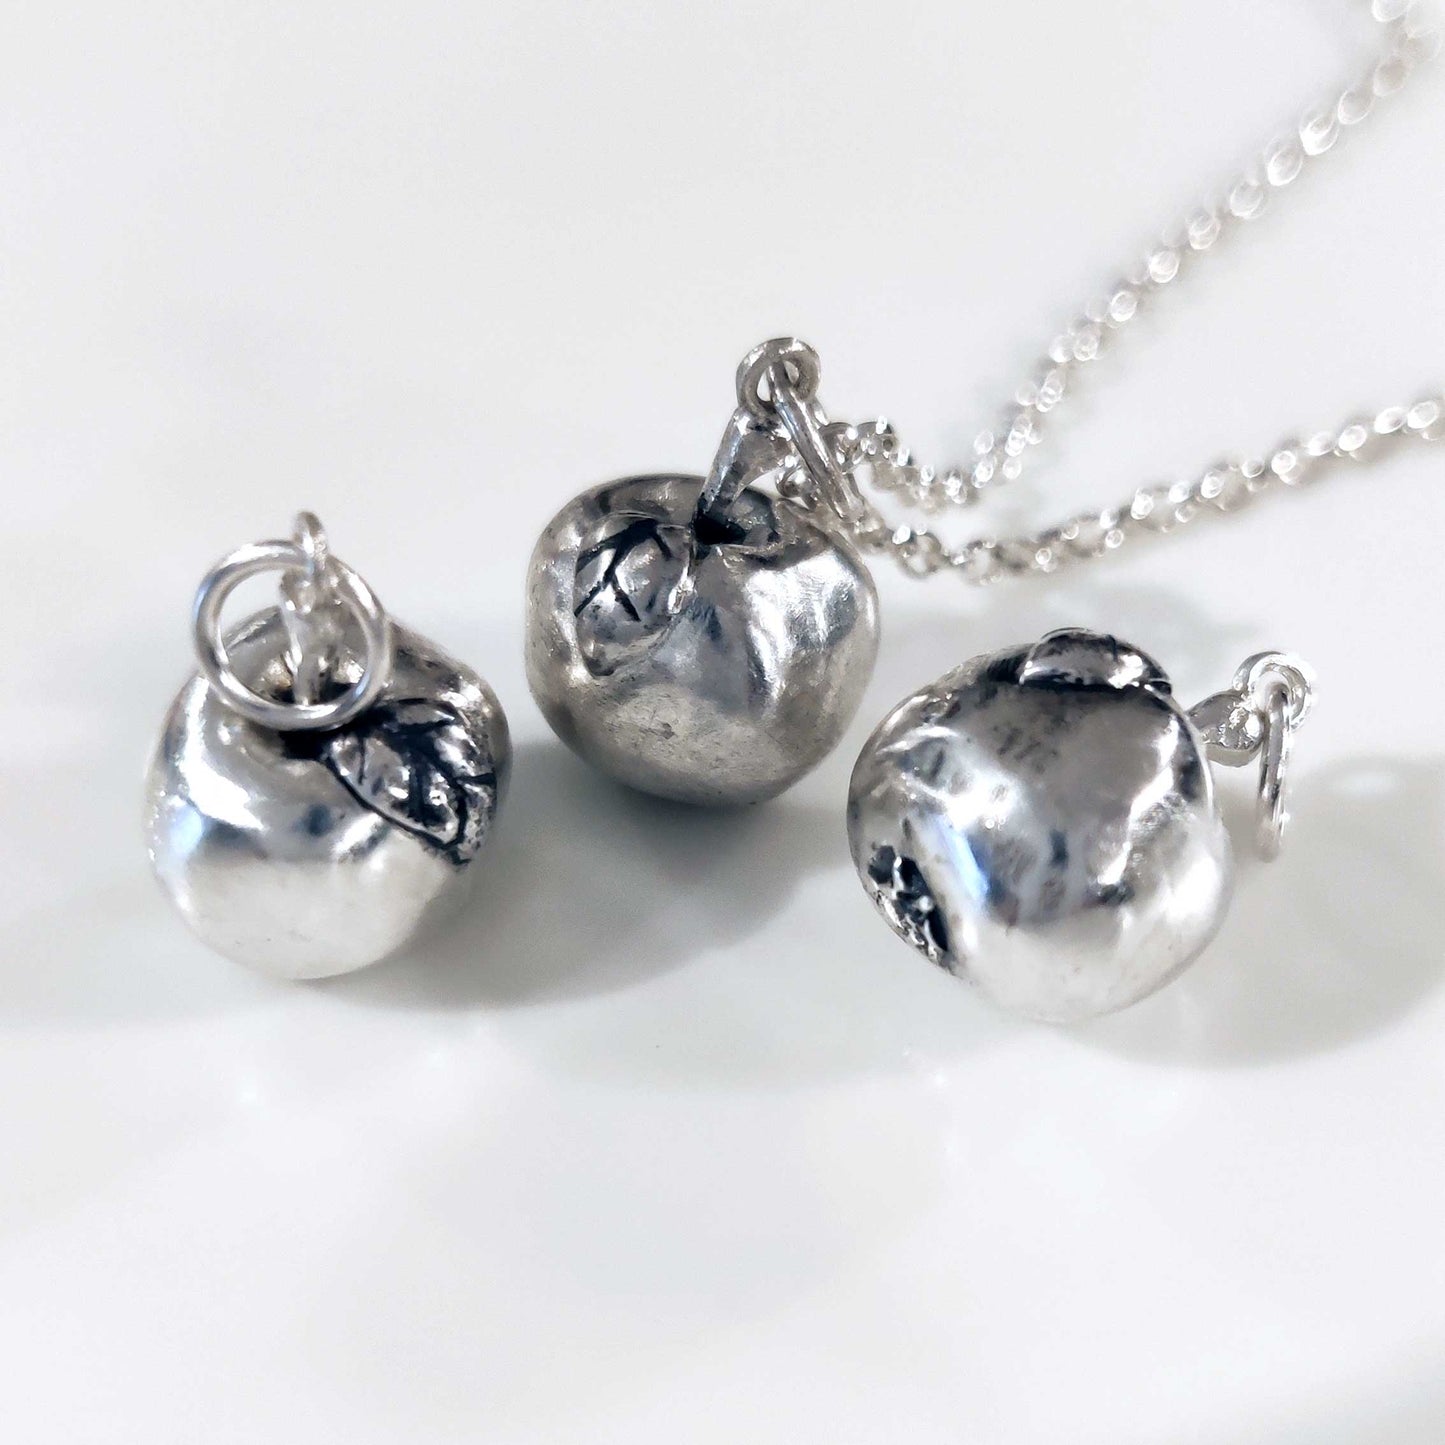 Three solid silver apple pendants